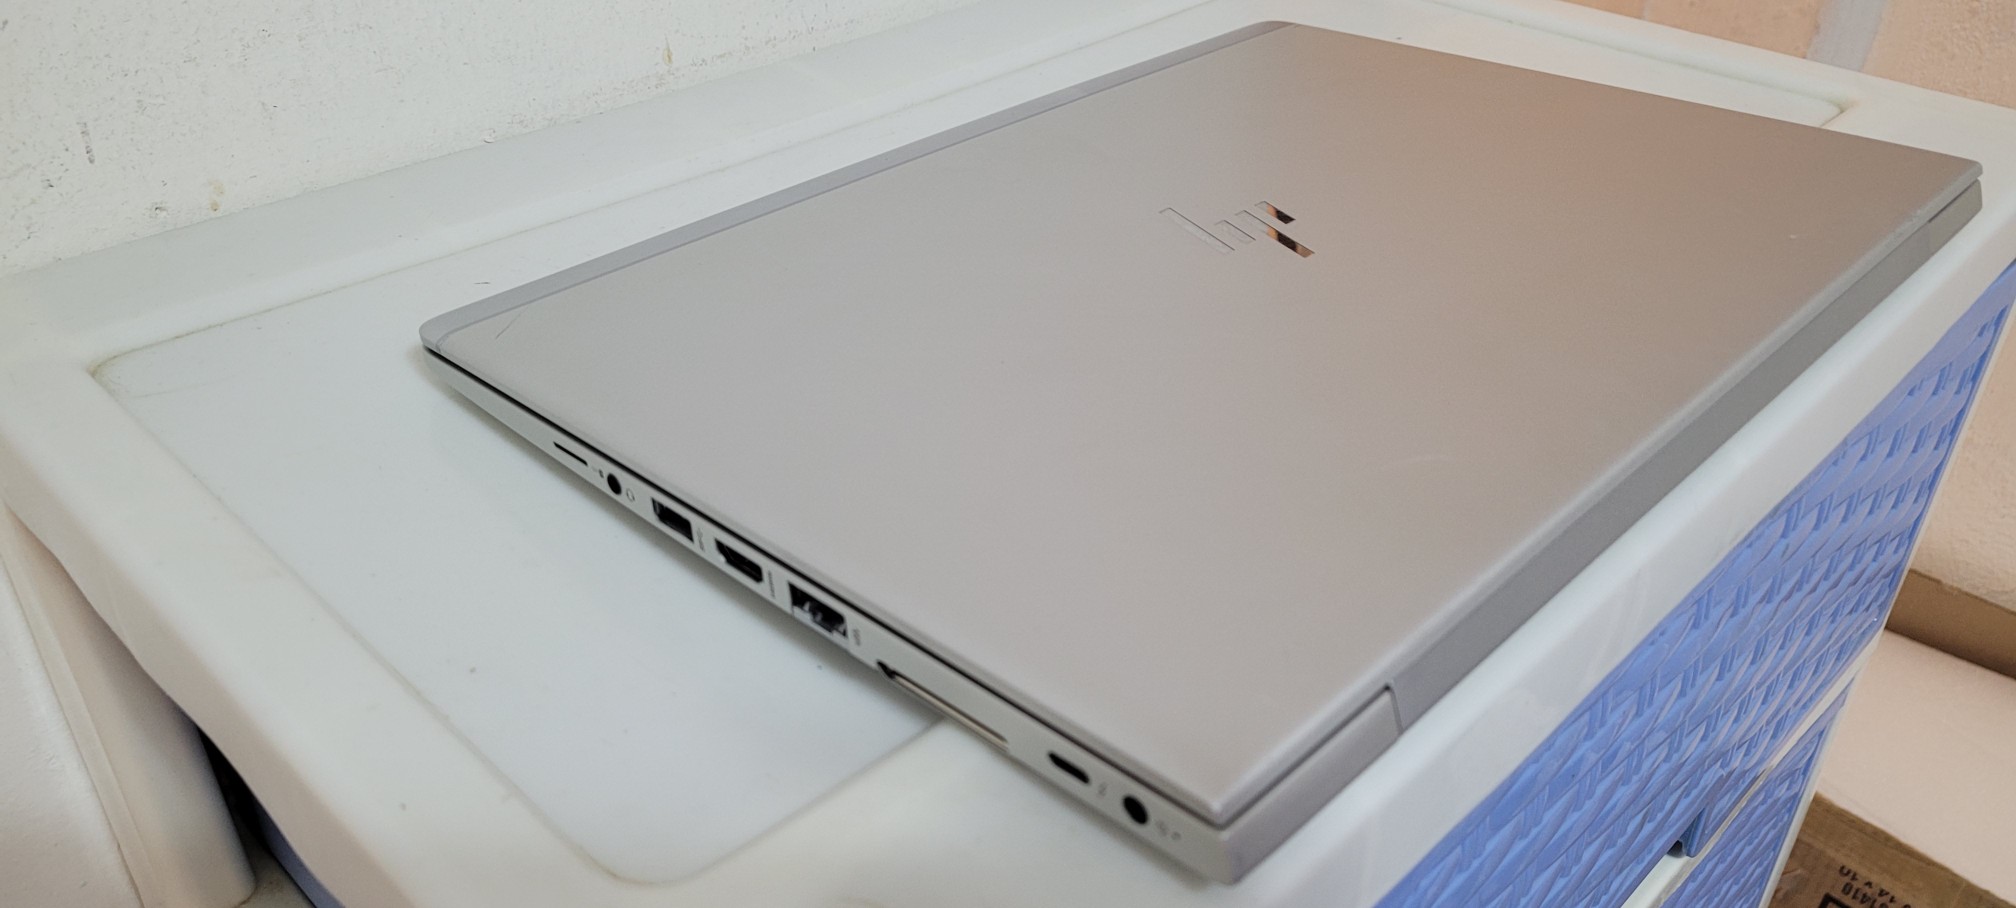 computadoras y laptops - laptop hp Slim 14 Pulg Core i5 7ma Gen Ram 8gb ddr4 Disco 256gb SSD Solido 1080p 2